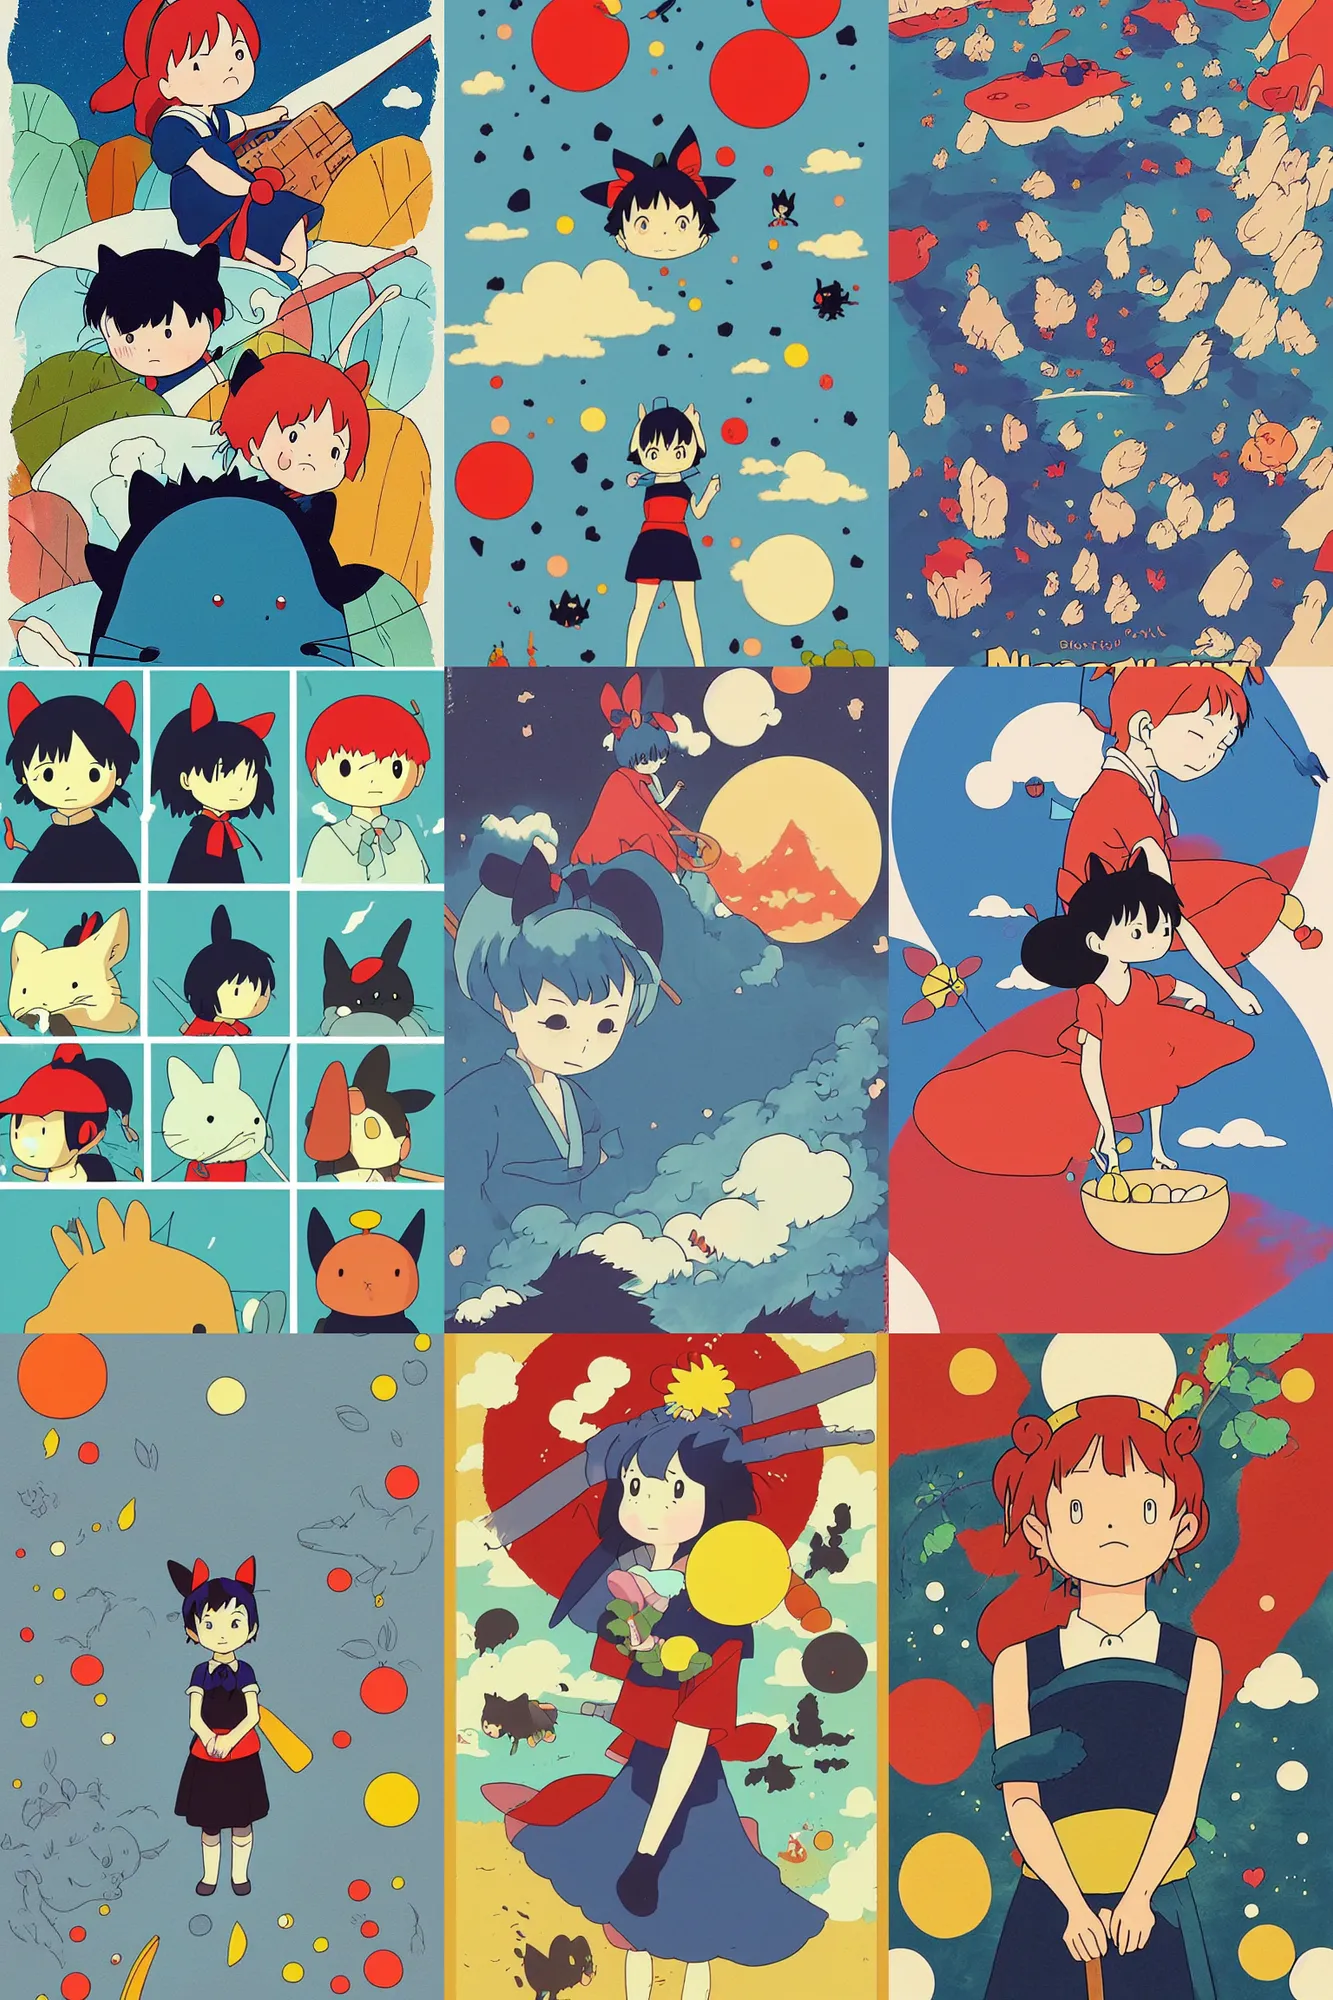 Prompt: Kikis Delivery Service, Ponyo Hayao Mitazaki, 2008 Studio Ghibli Minimal Movie Posters, fantasy magic, art masterpiece #wip #illustration #illustradraw #illustrator #vector #colors #colorschemes